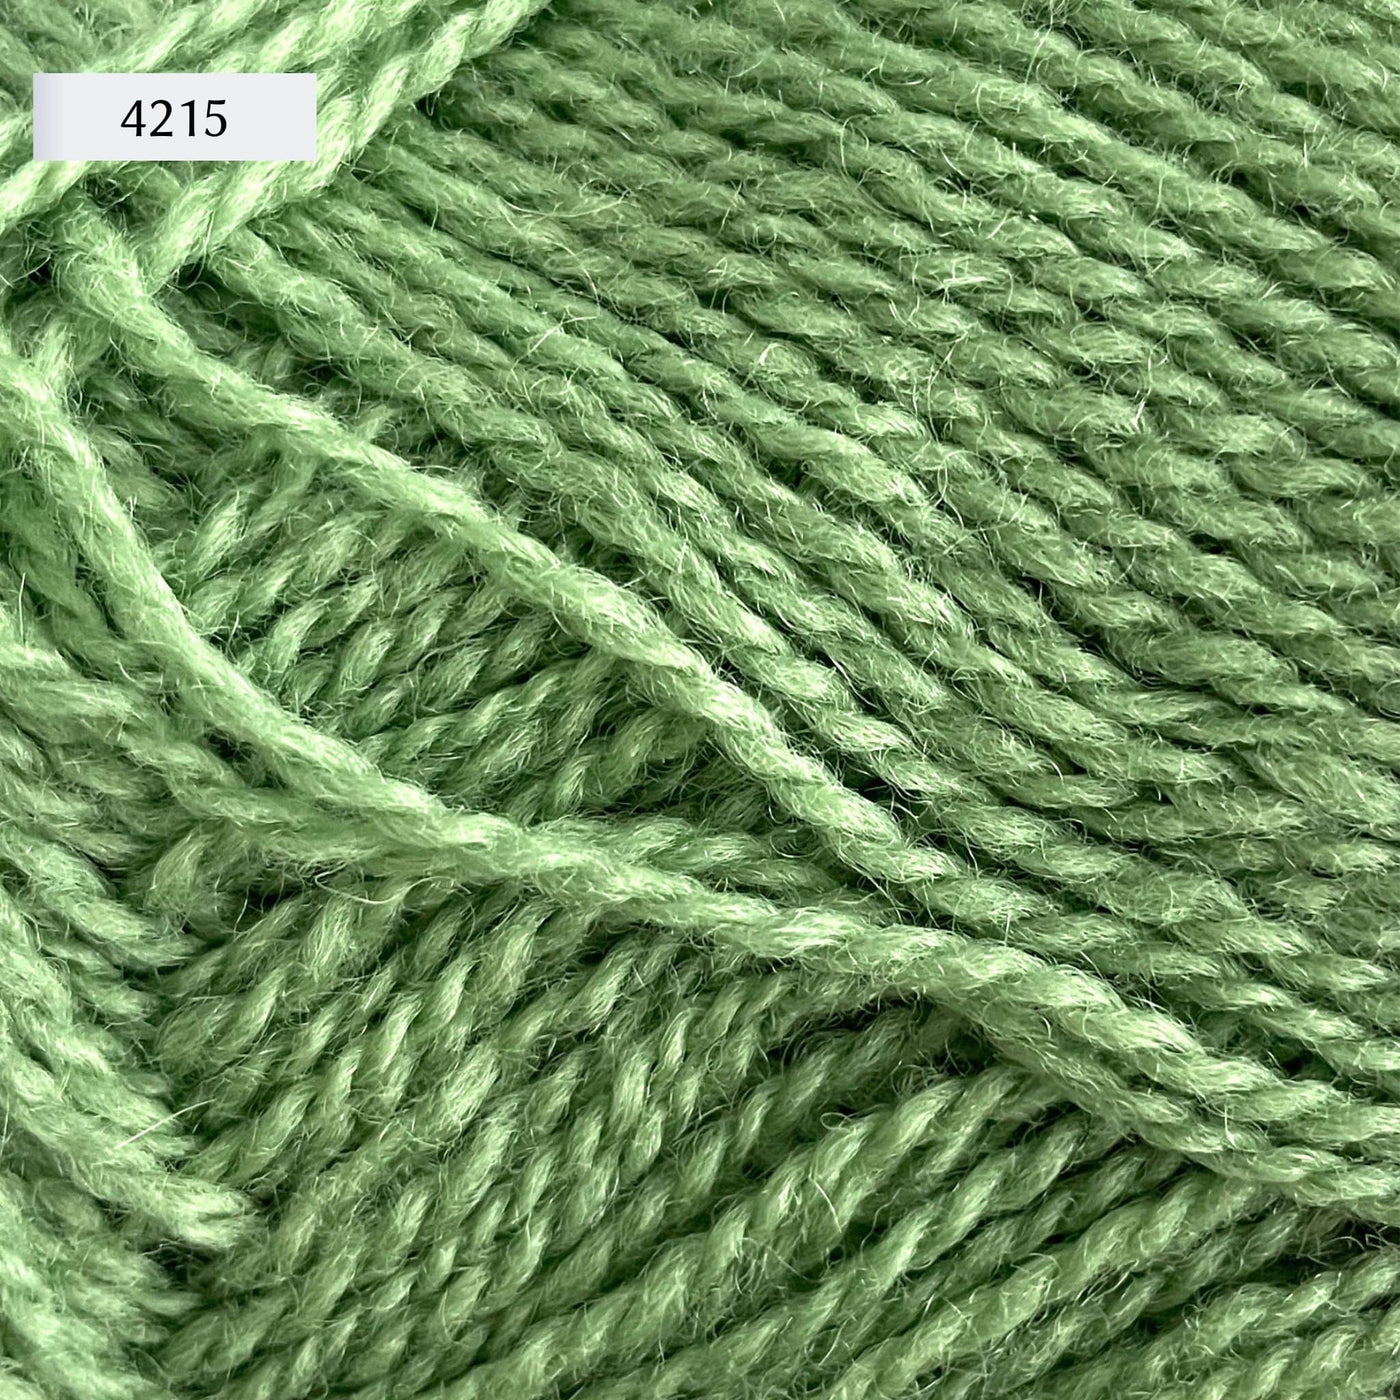 Rauma Finullgarn, a fingering/sport weight yarn, in color 4125, a sage/mint green